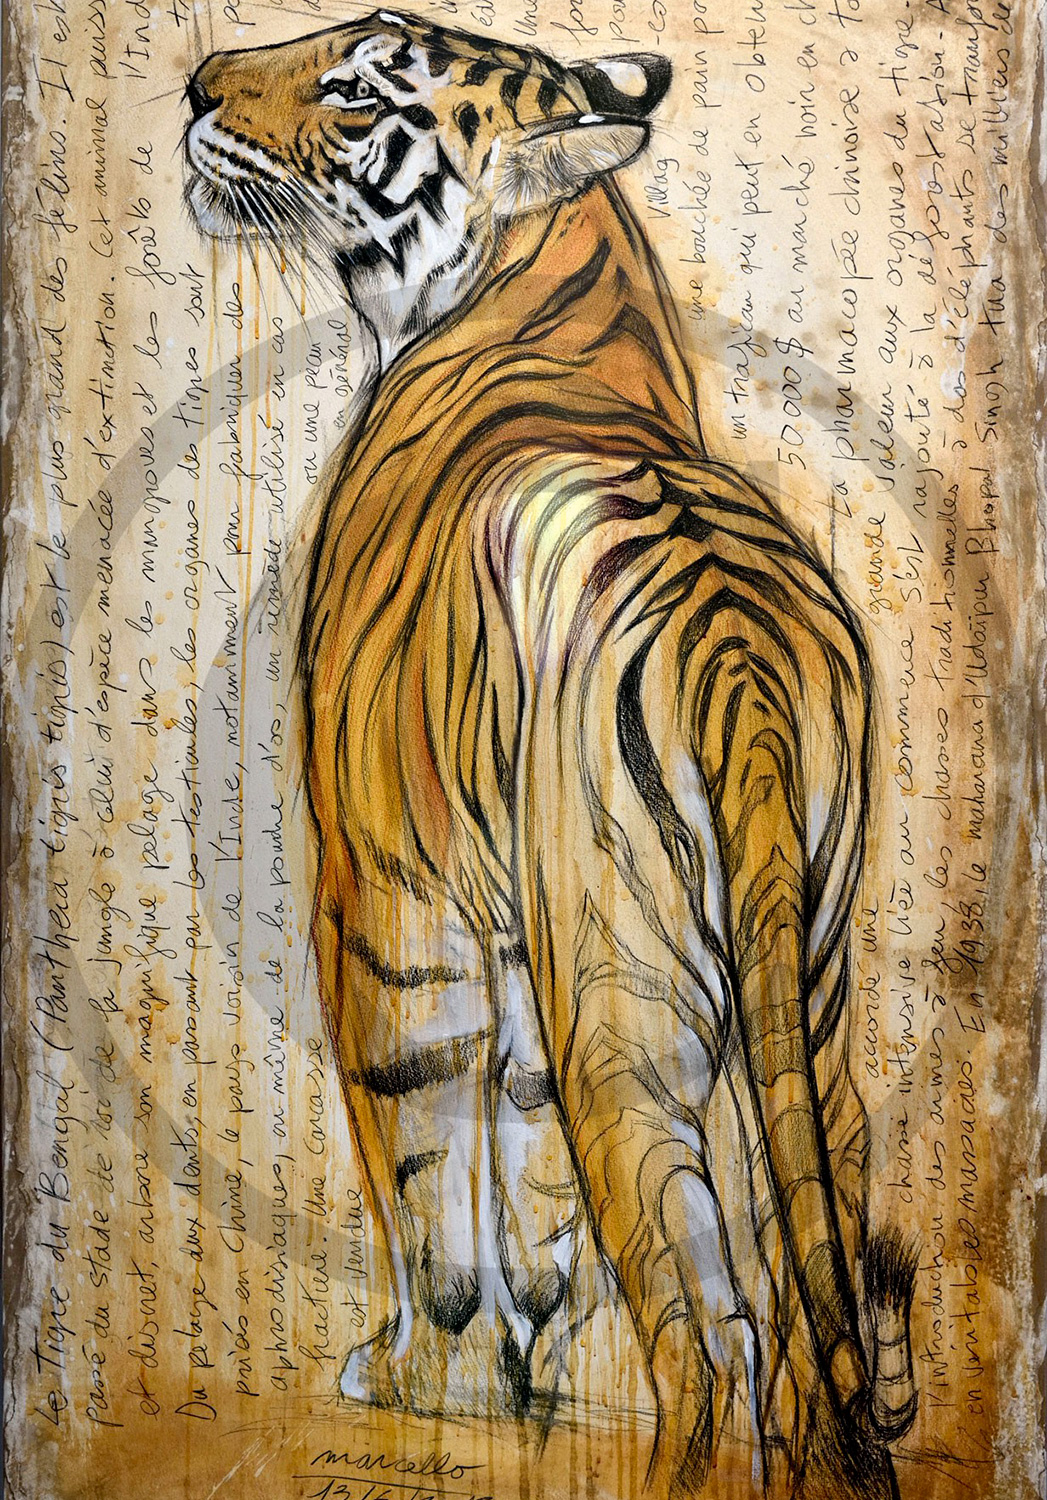 Marcello-art : Originaux sur toile 298 - Tigre du Bengale